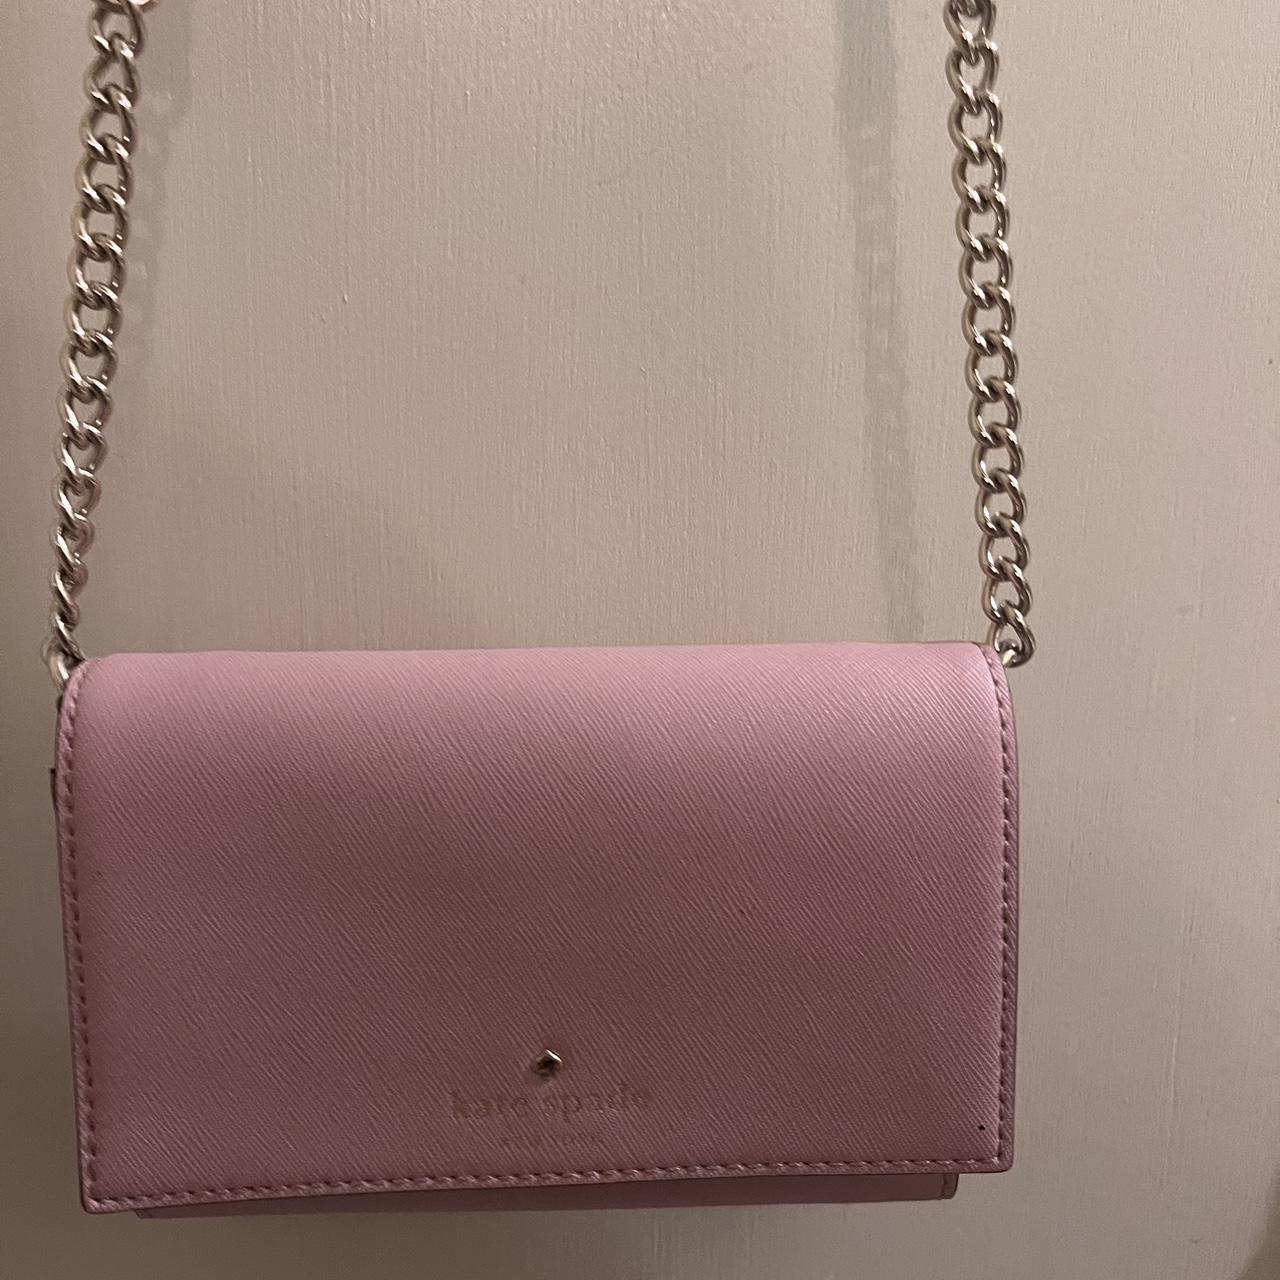 Hot pink mini Kate Spade cross body purse